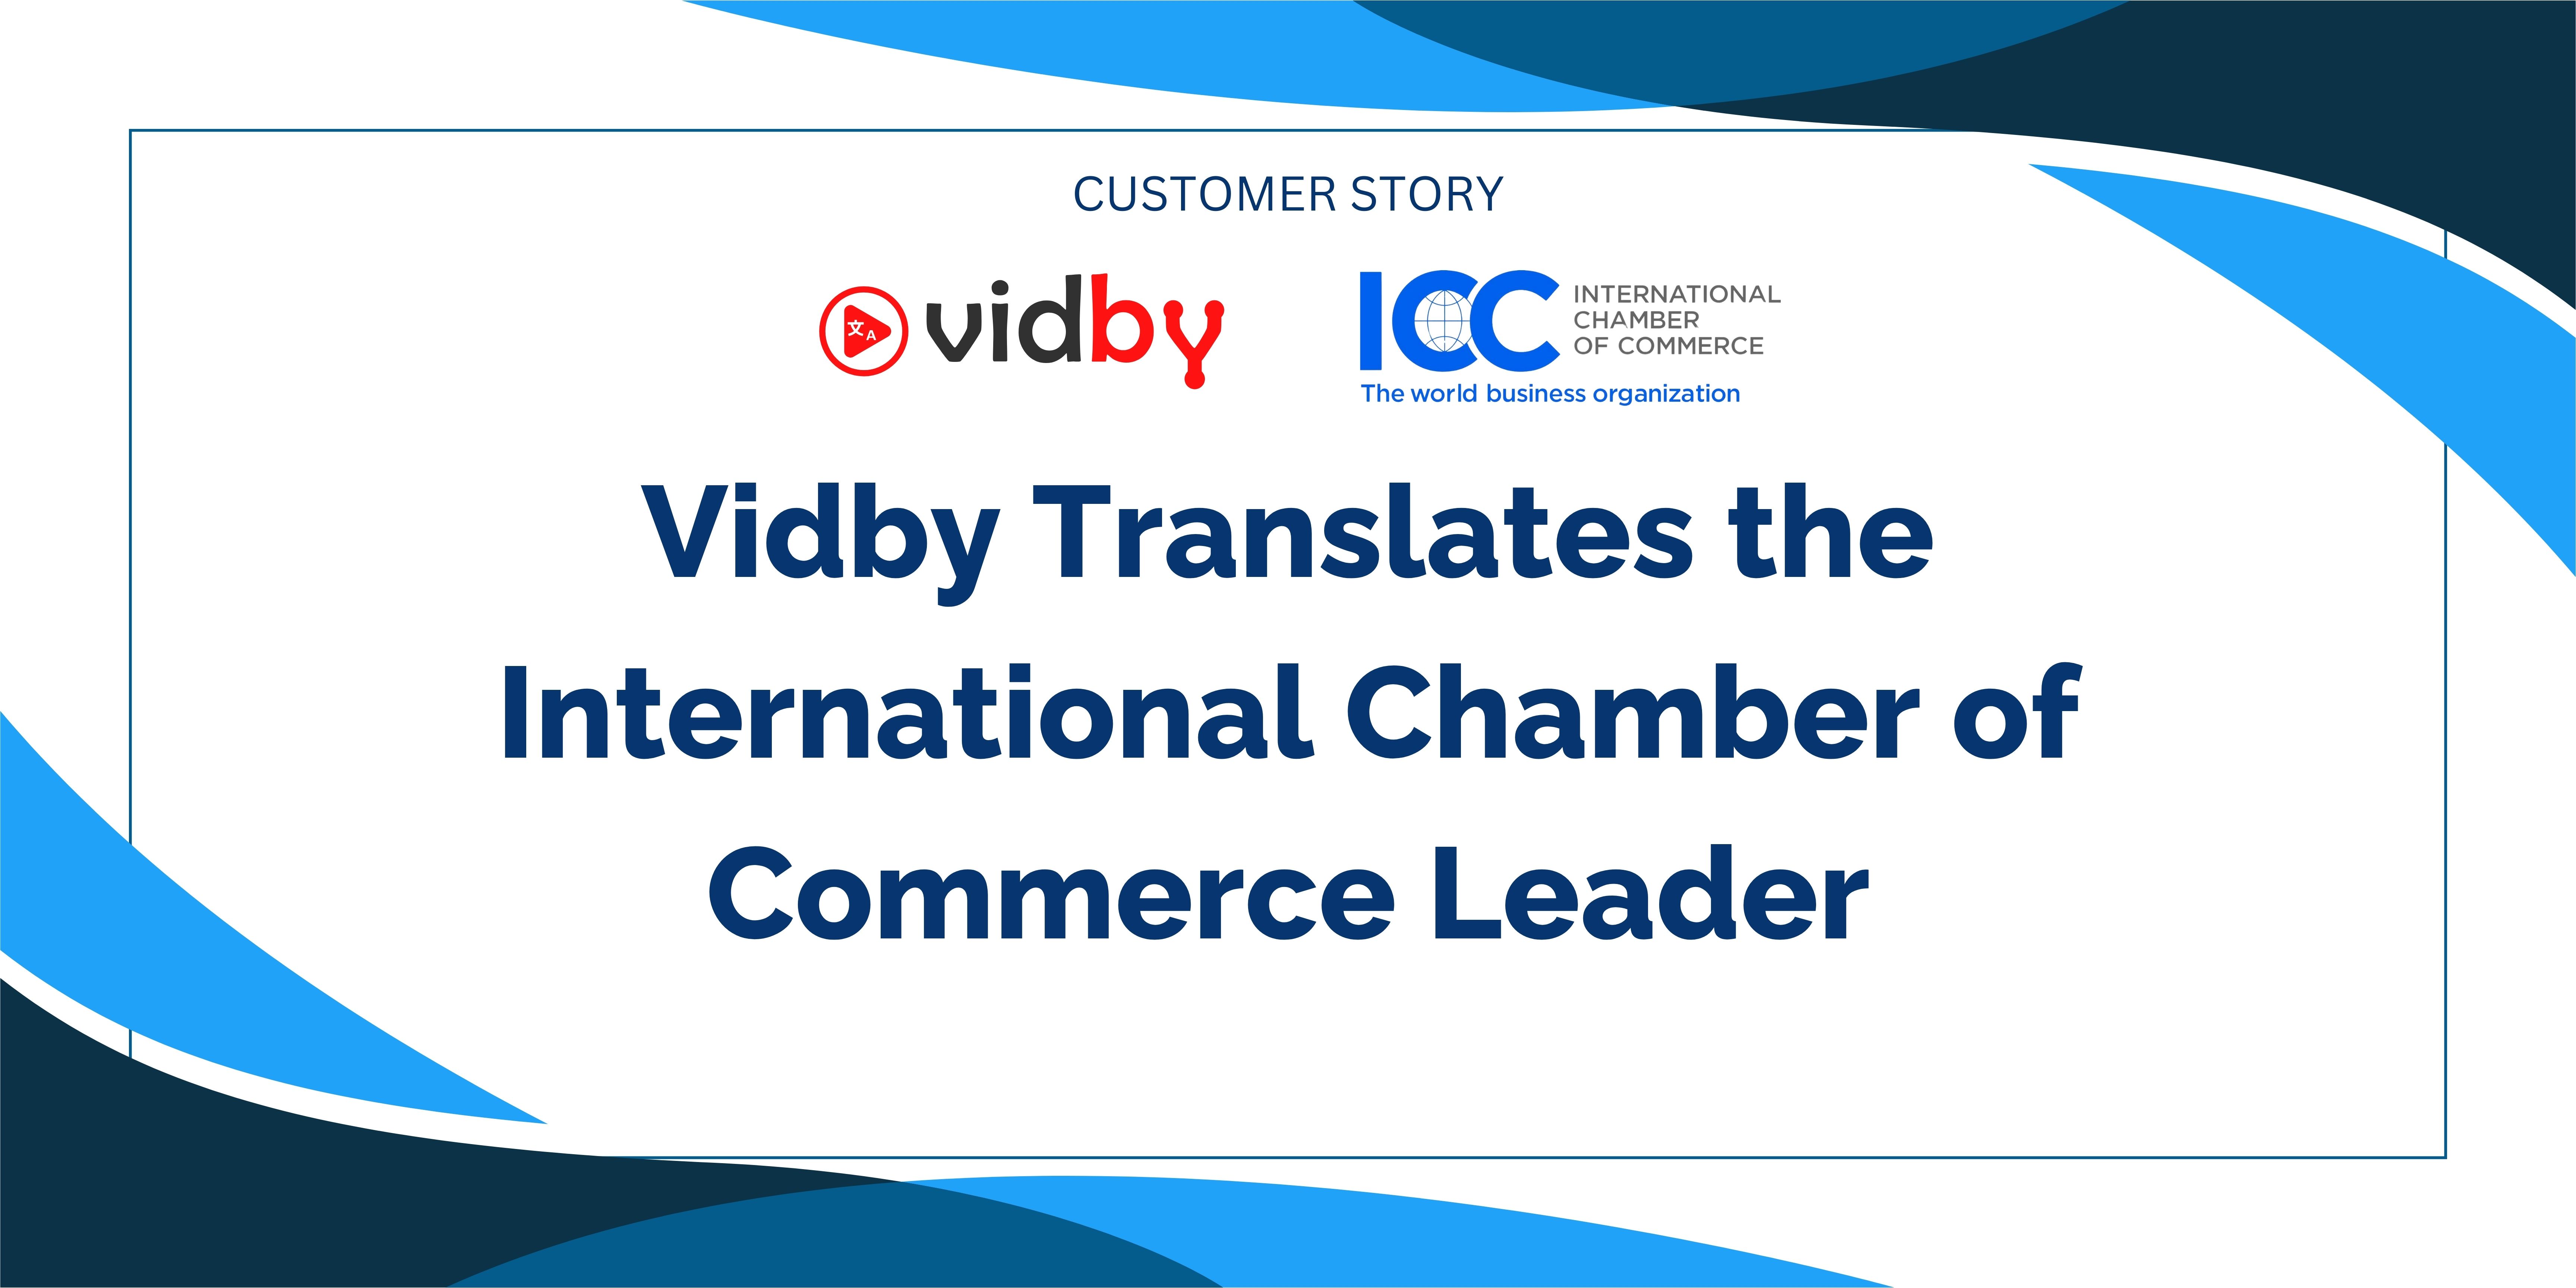 Vidby Translates the International Chamber of Commerce Leader